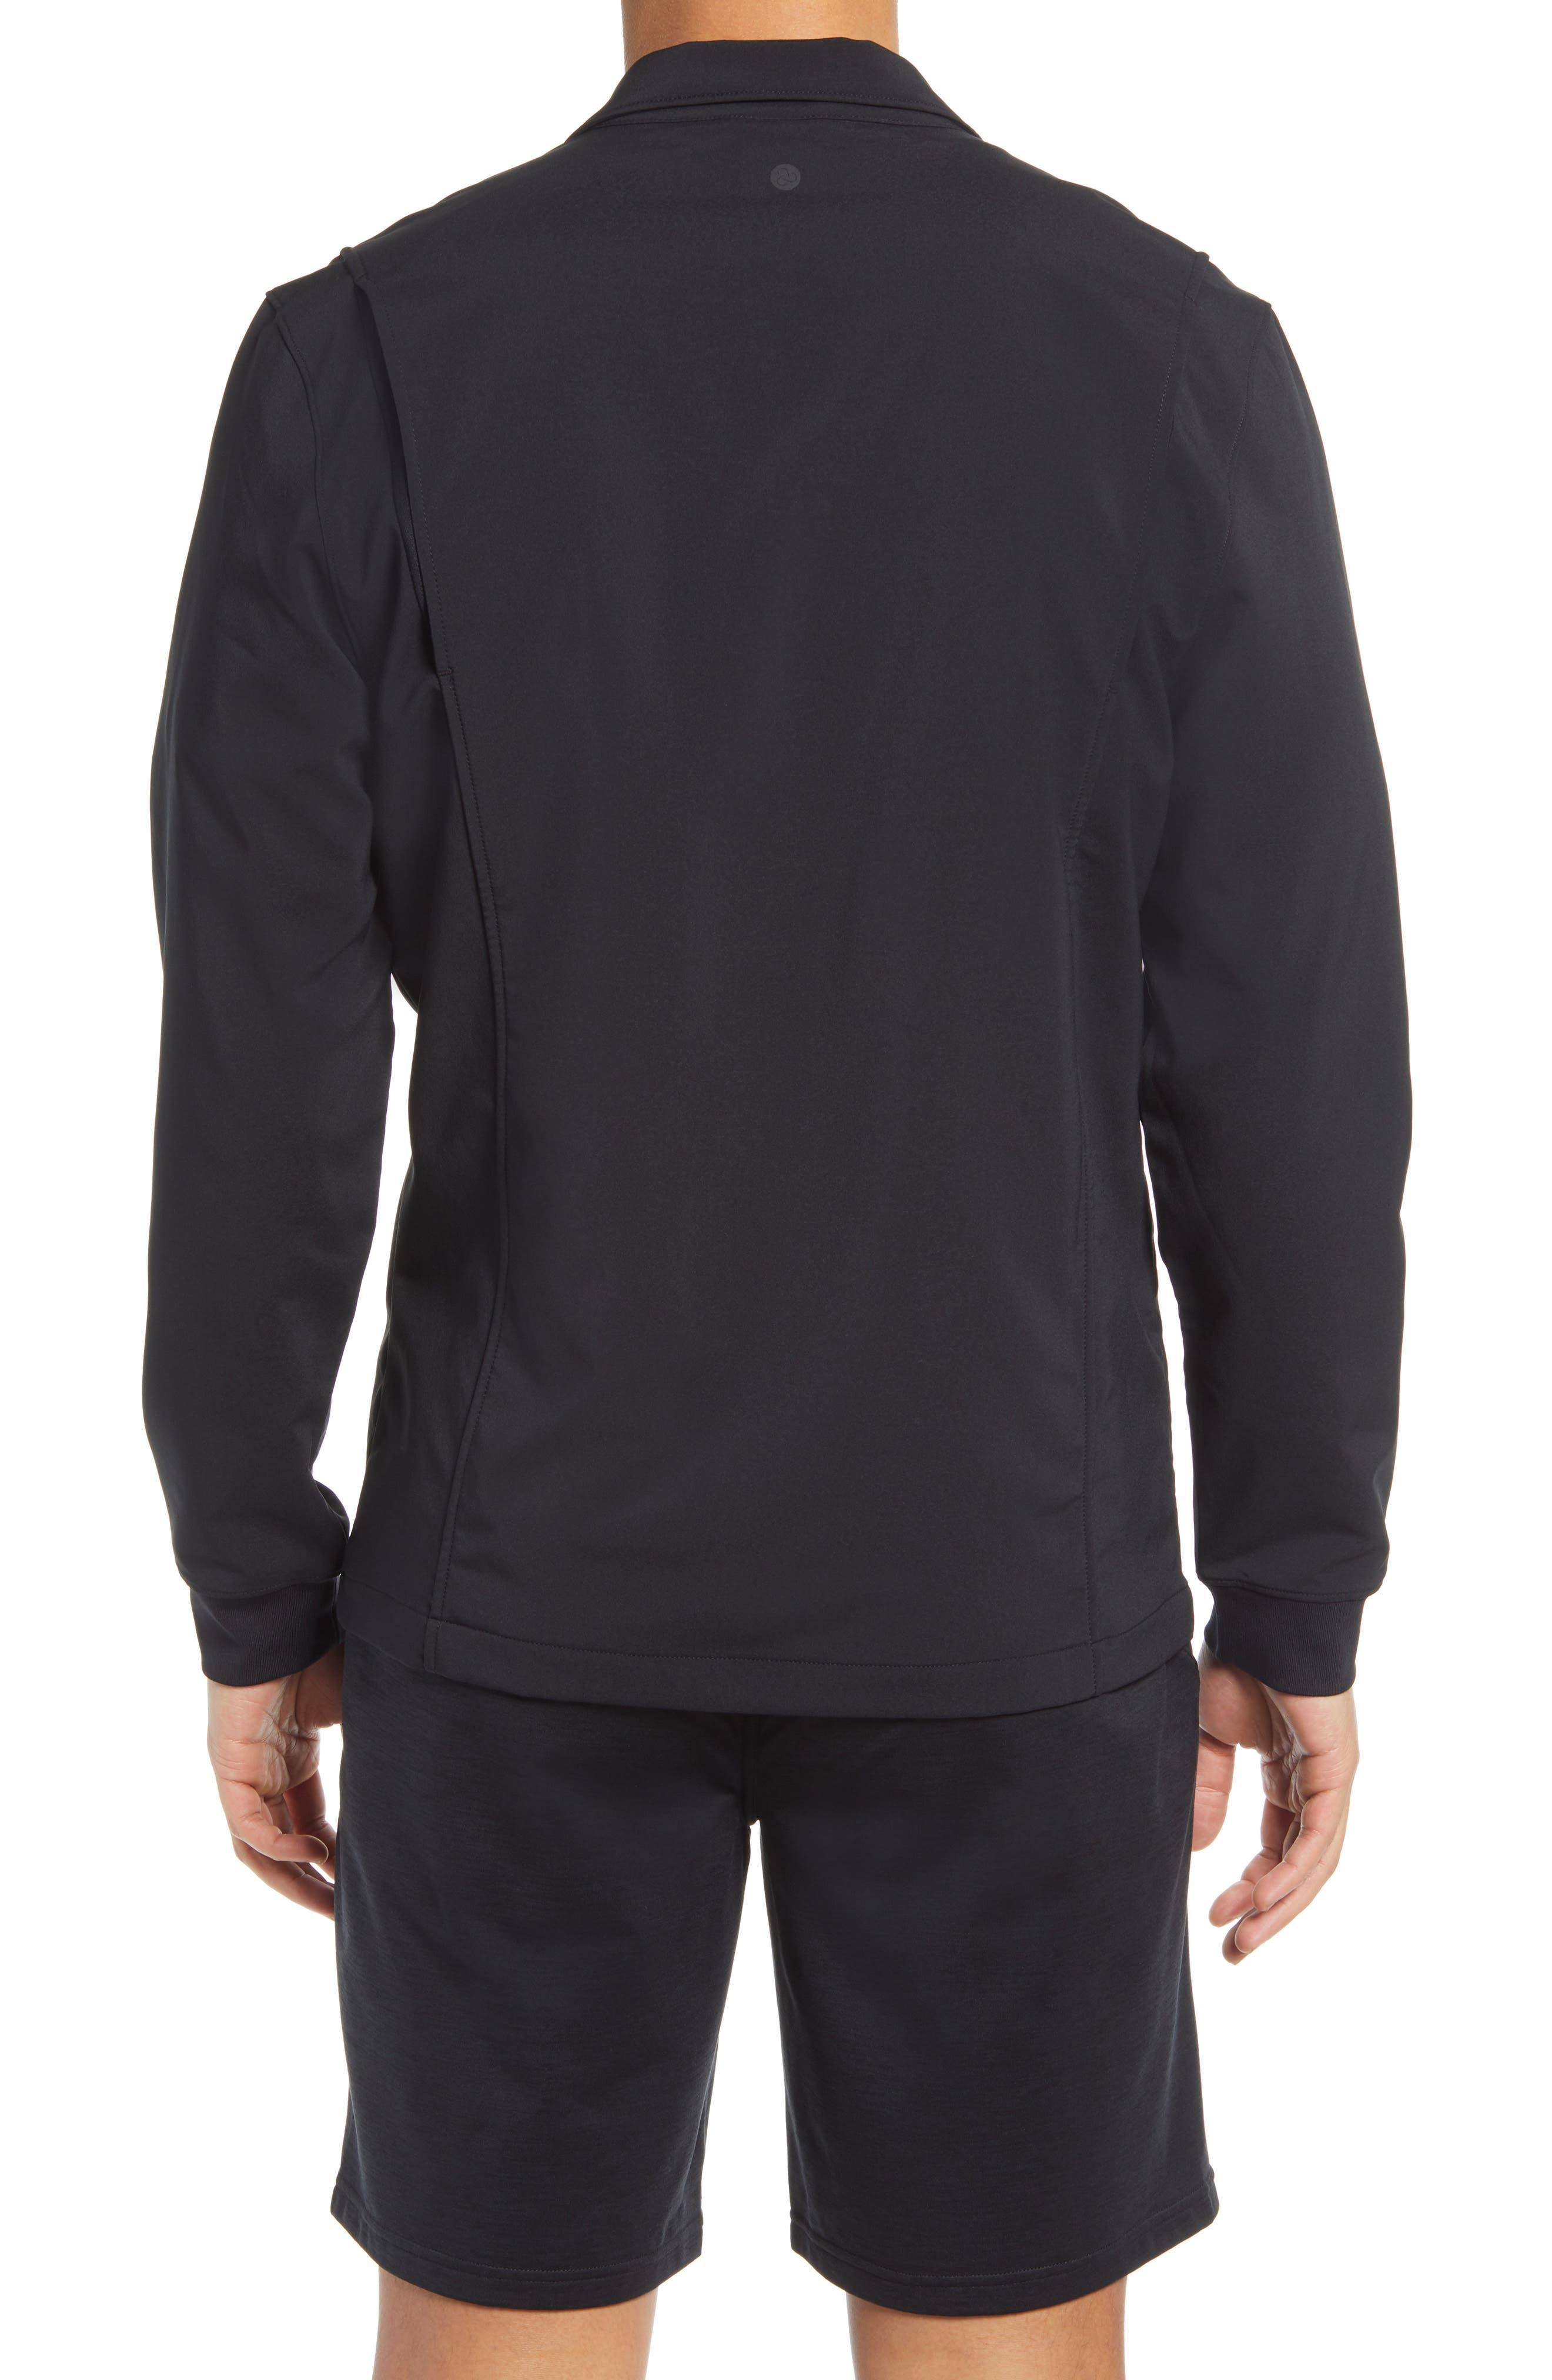 Buy Zella Seamless Performance T-shirt - Black At 59% Off